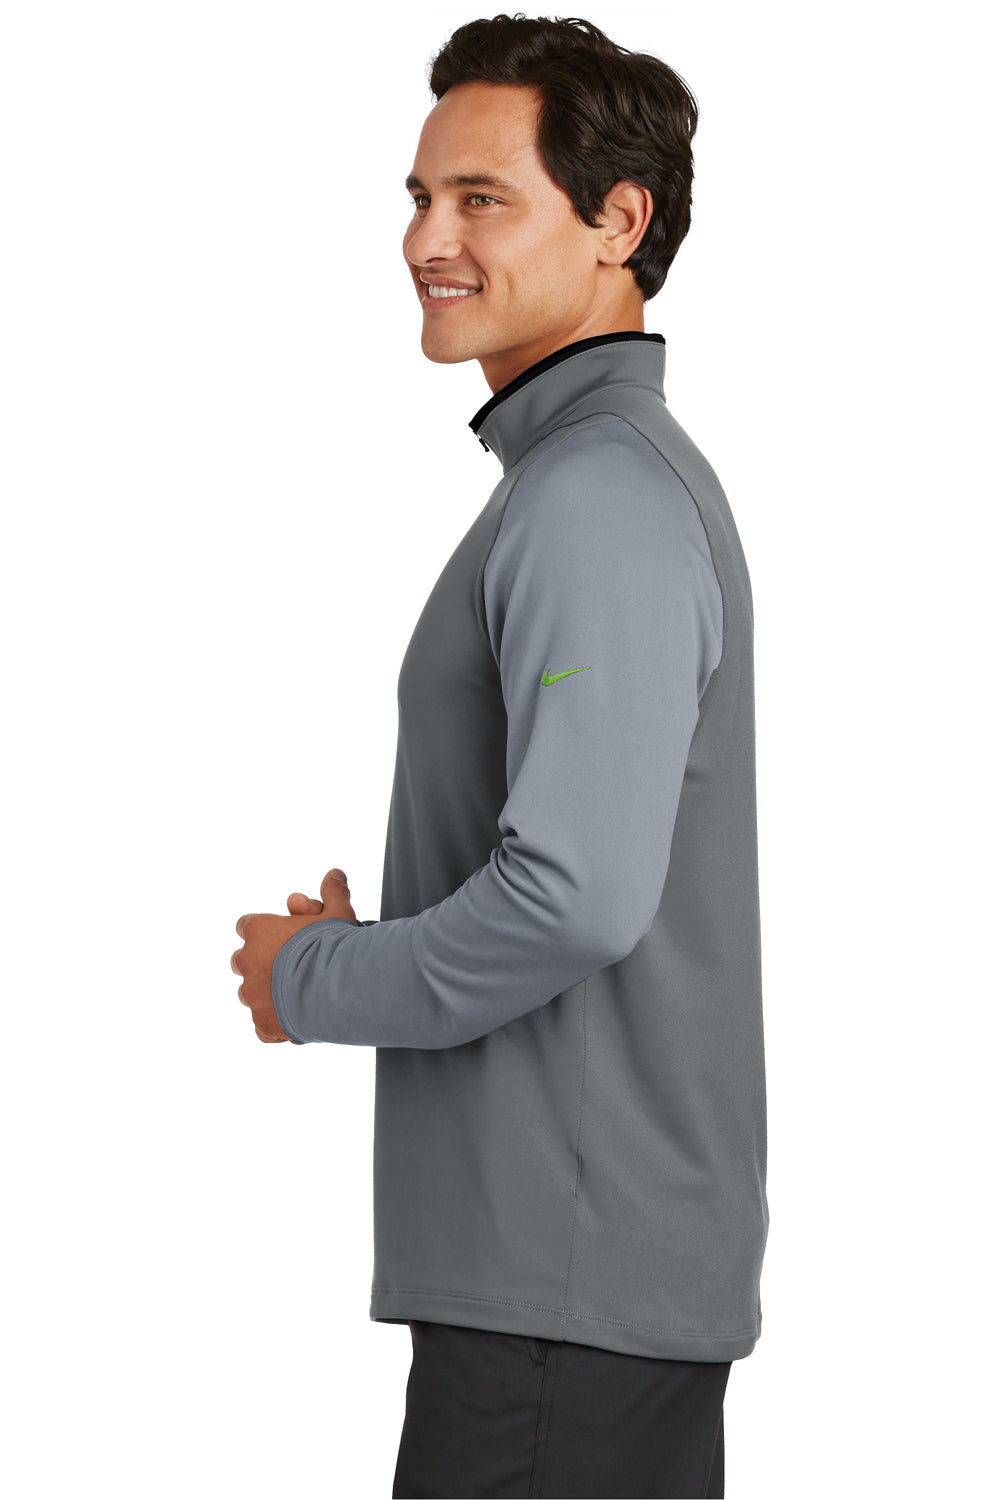 Nike 779795 Mens Dri-Fit Moisture Wicking 1/4 Zip Sweatshirt Dark Grey/Cool Grey Model Side